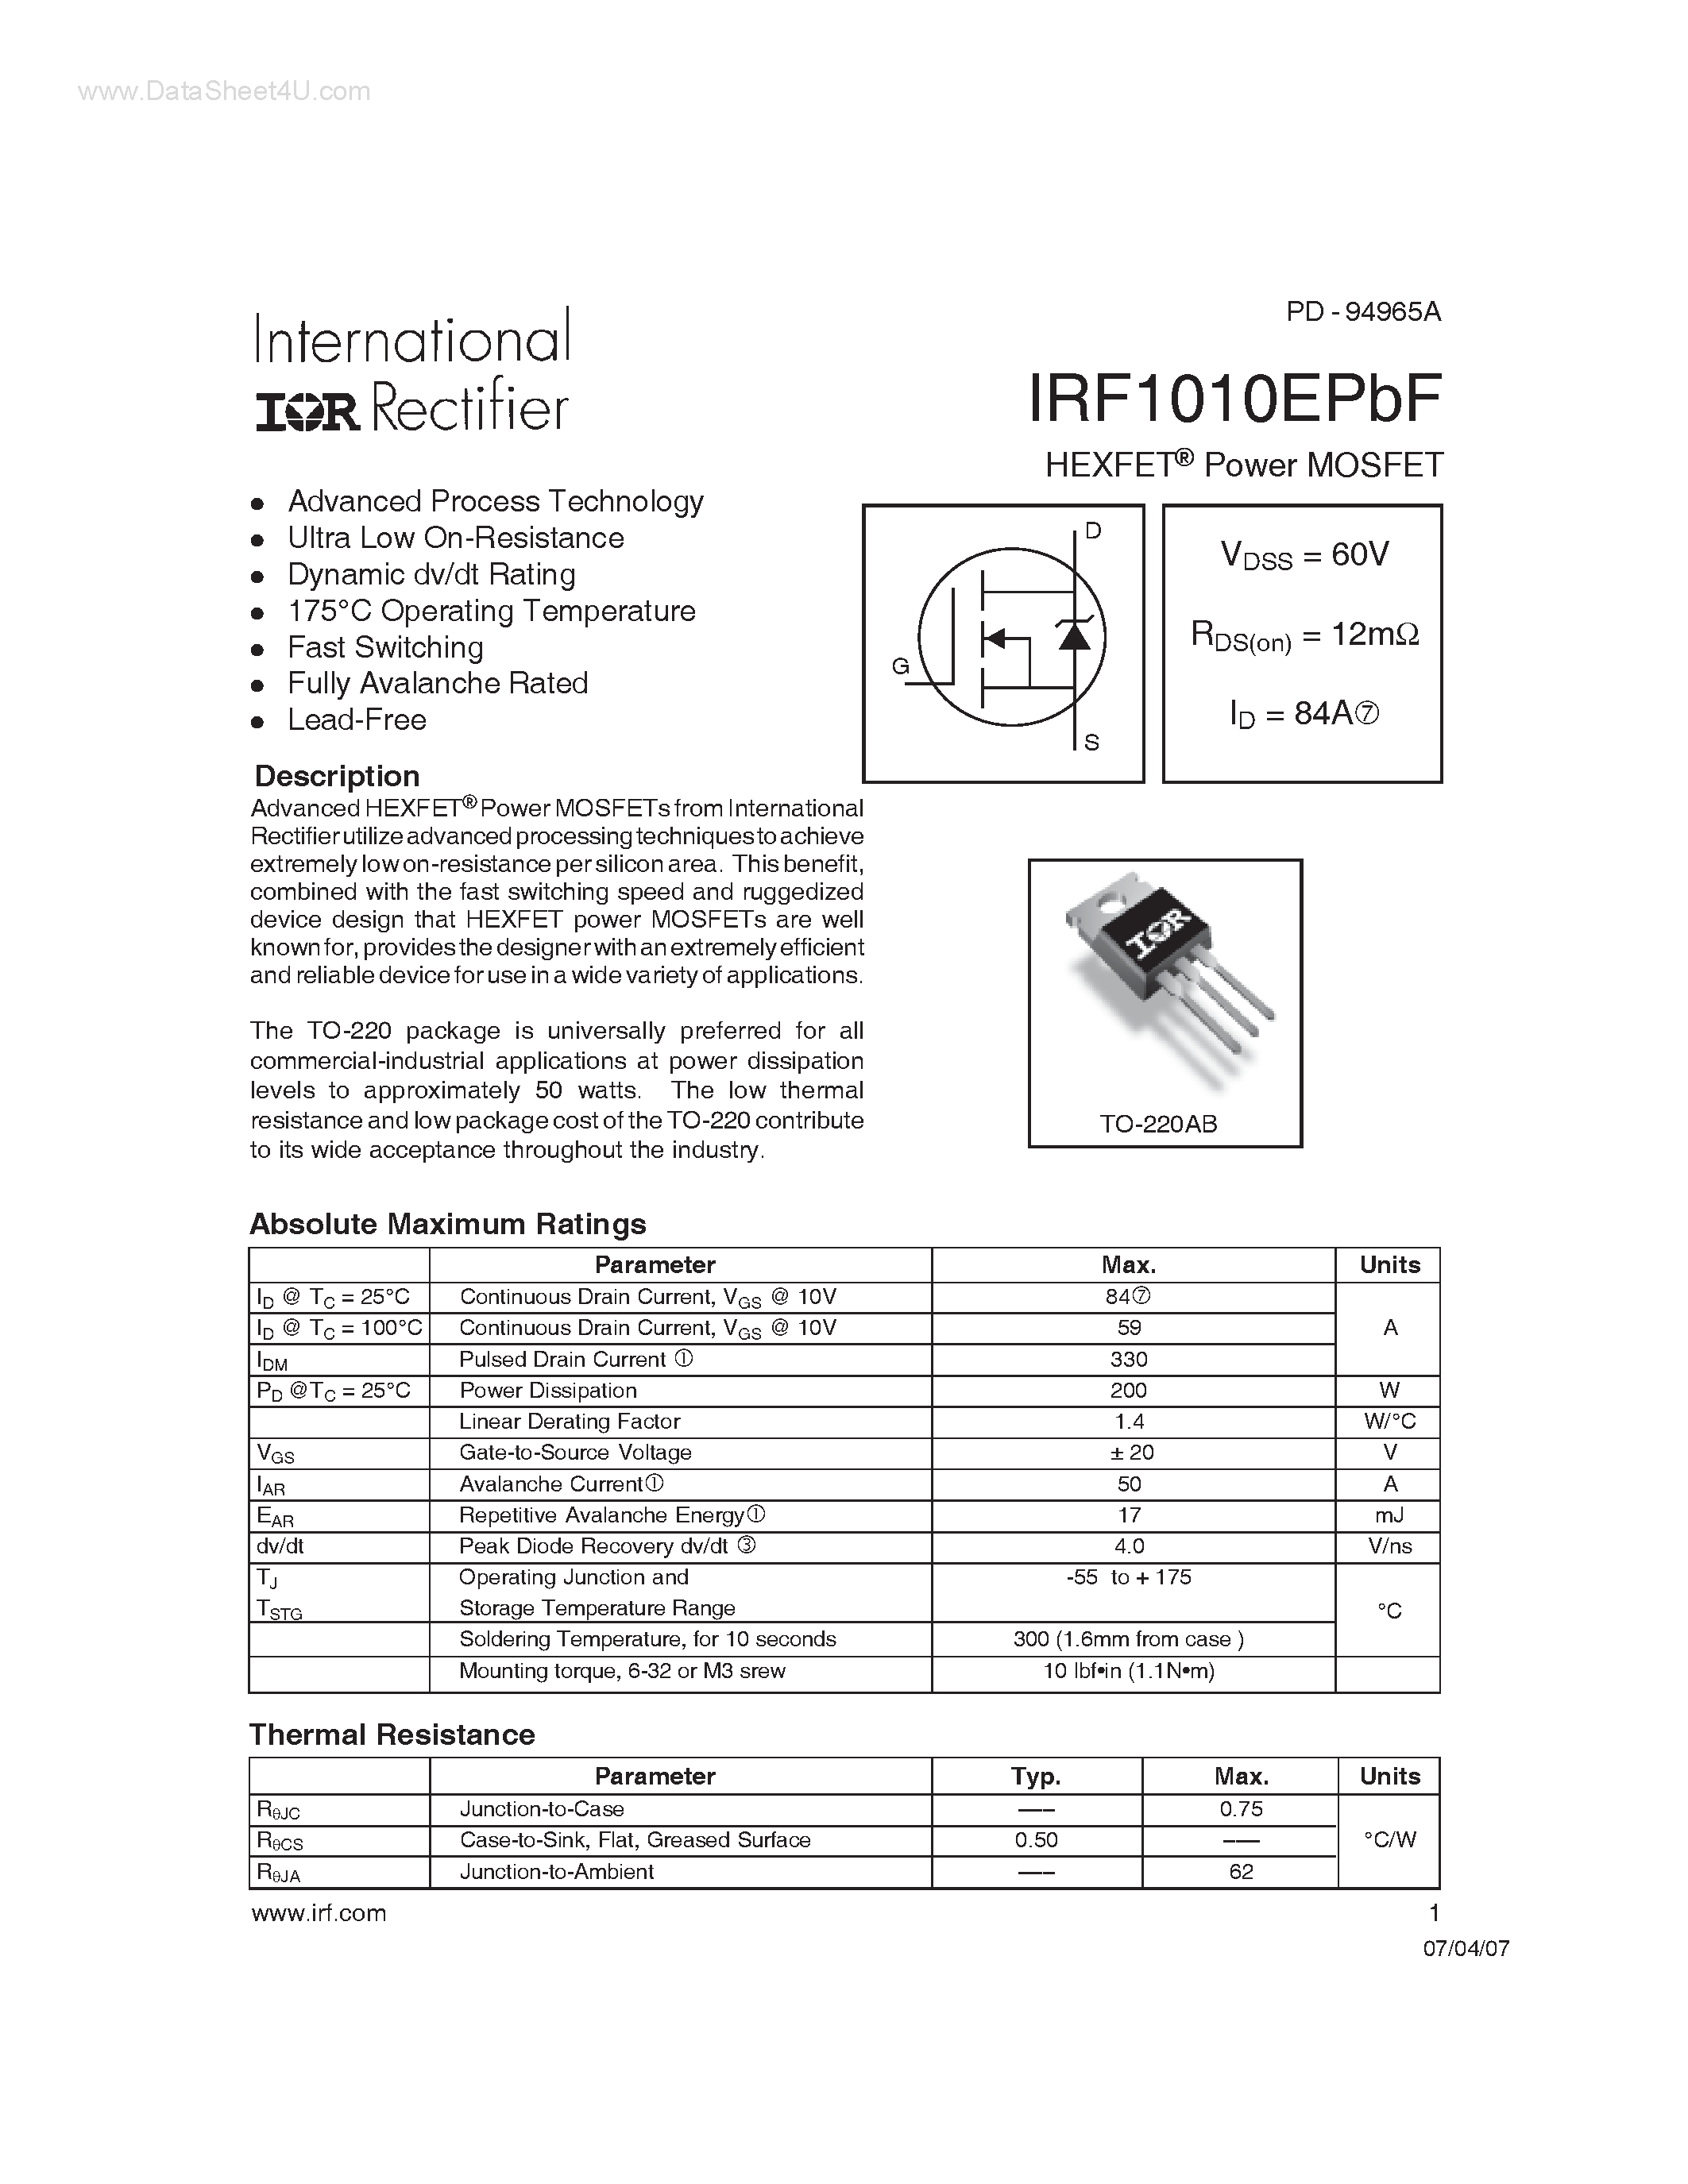 Даташит IRF1010EPBF - Power MOSFET страница 1